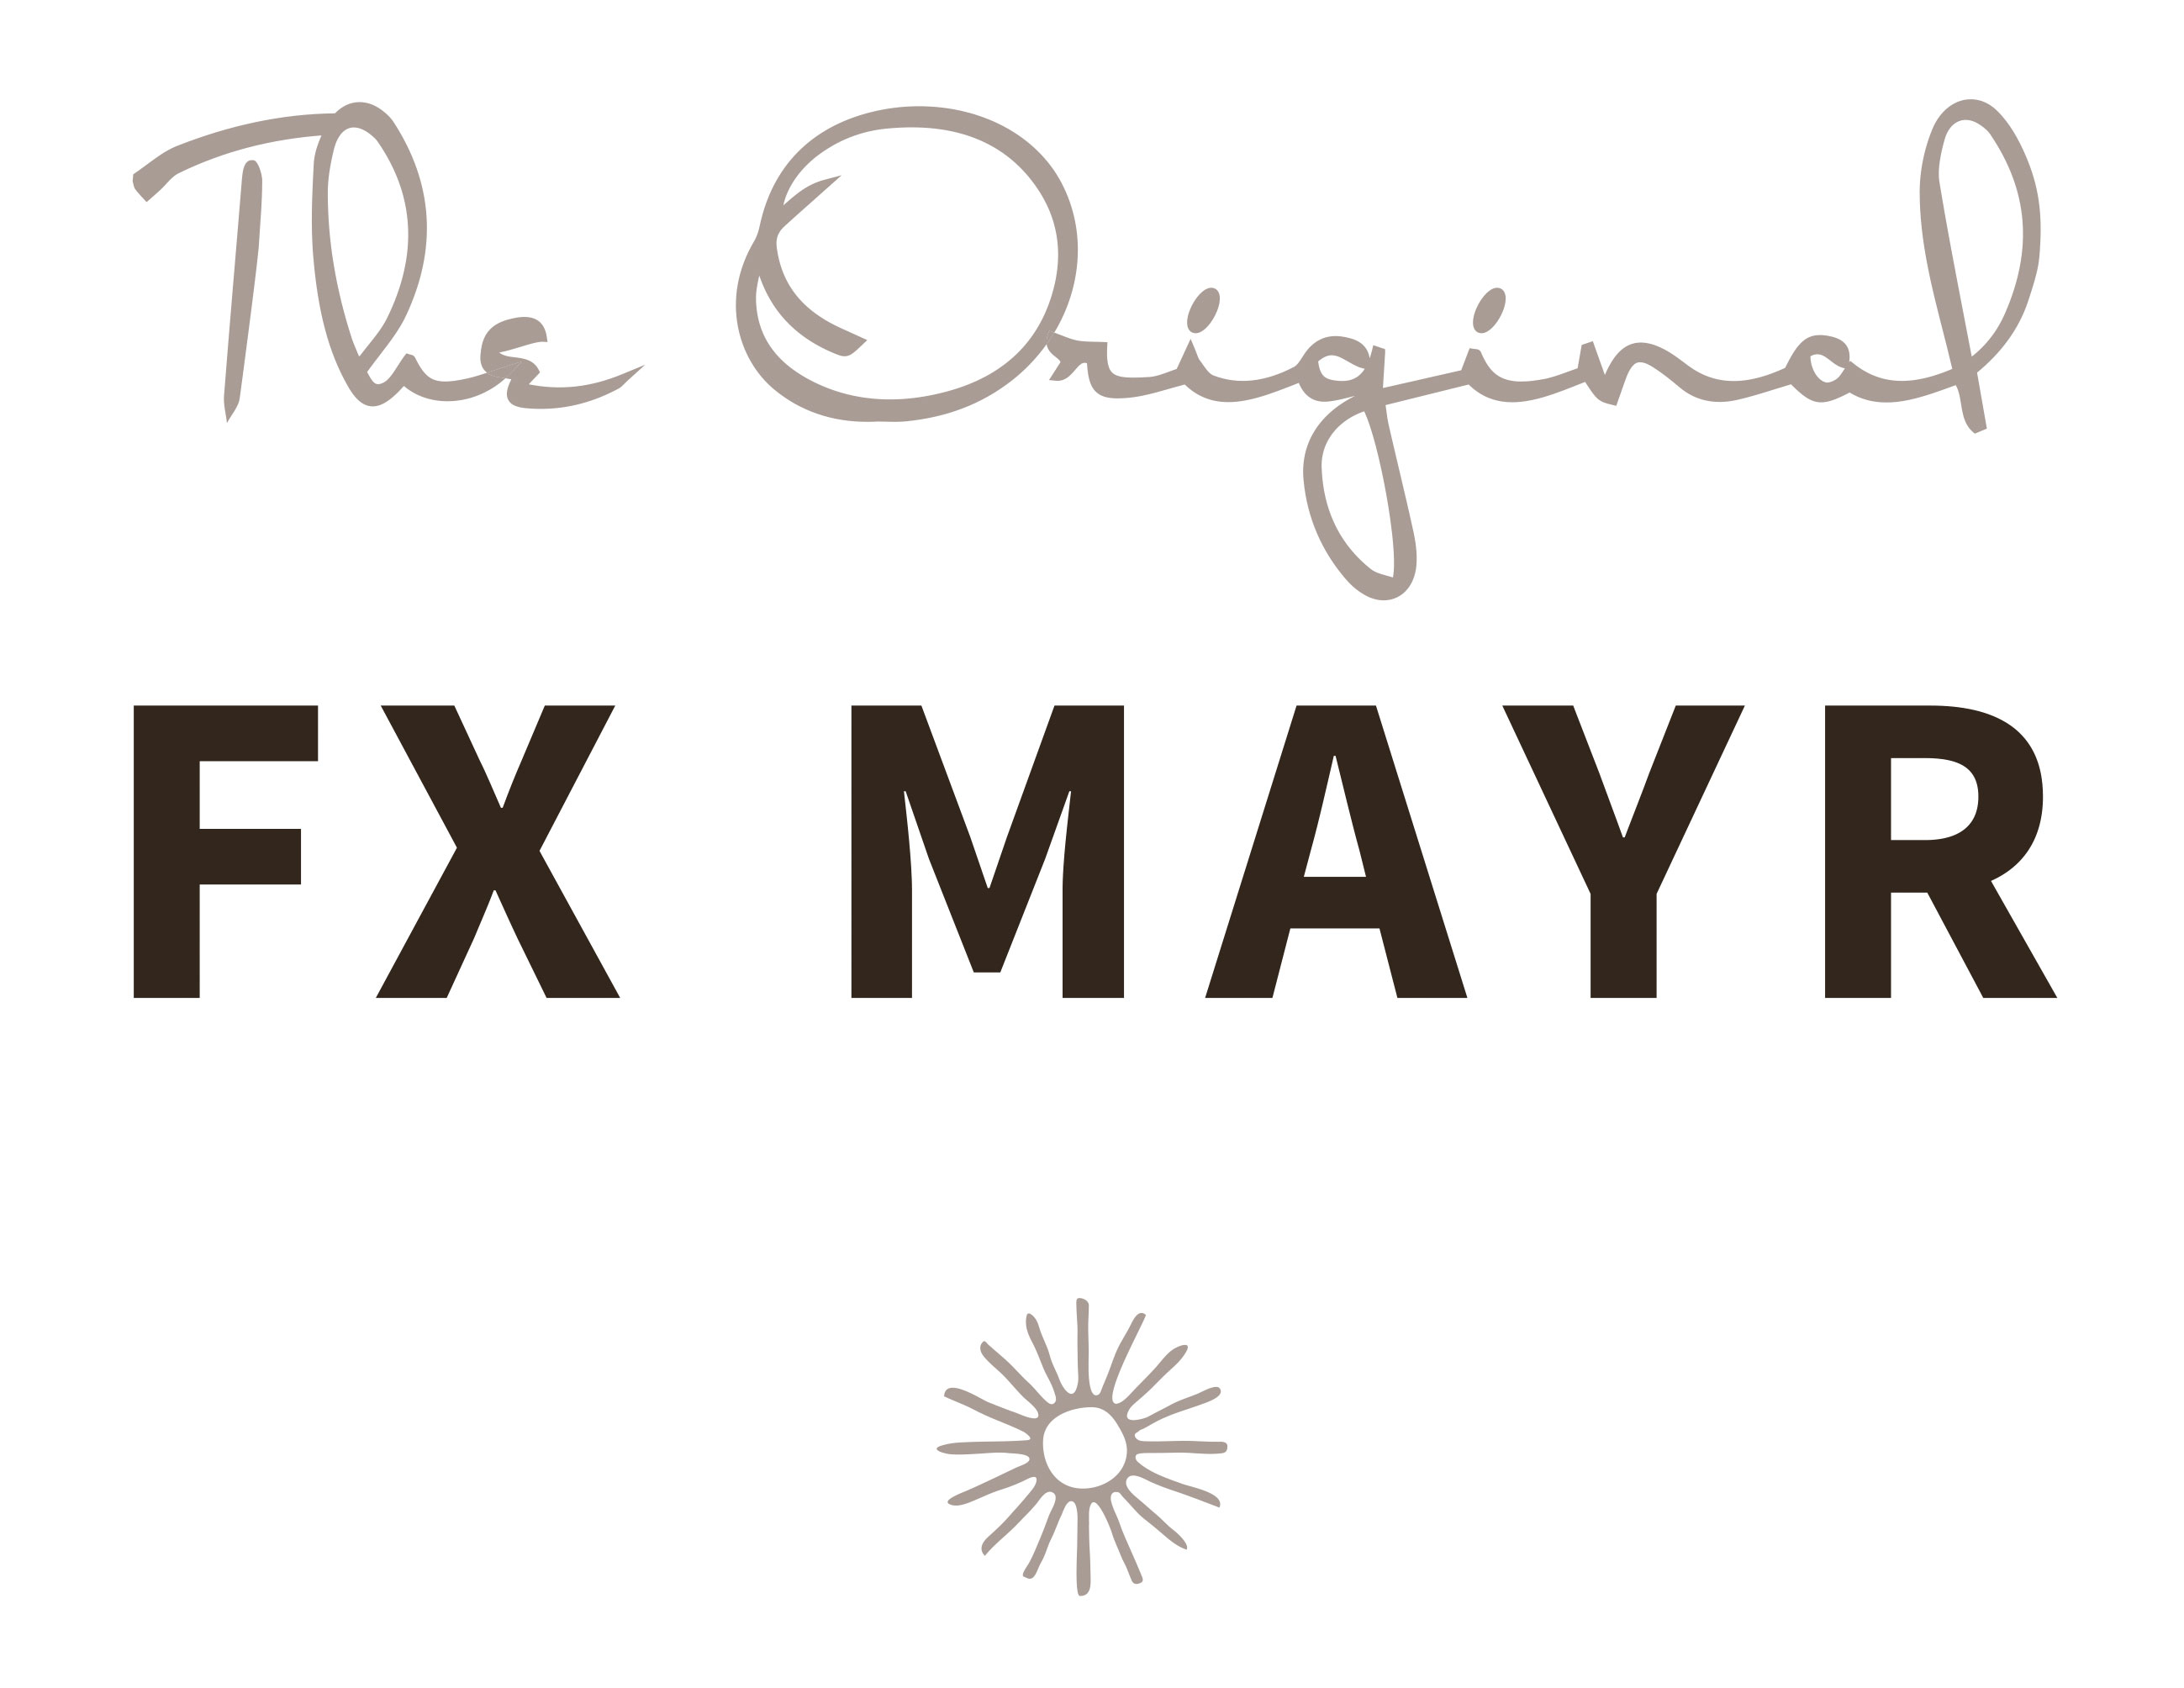 The Original FX Mayr